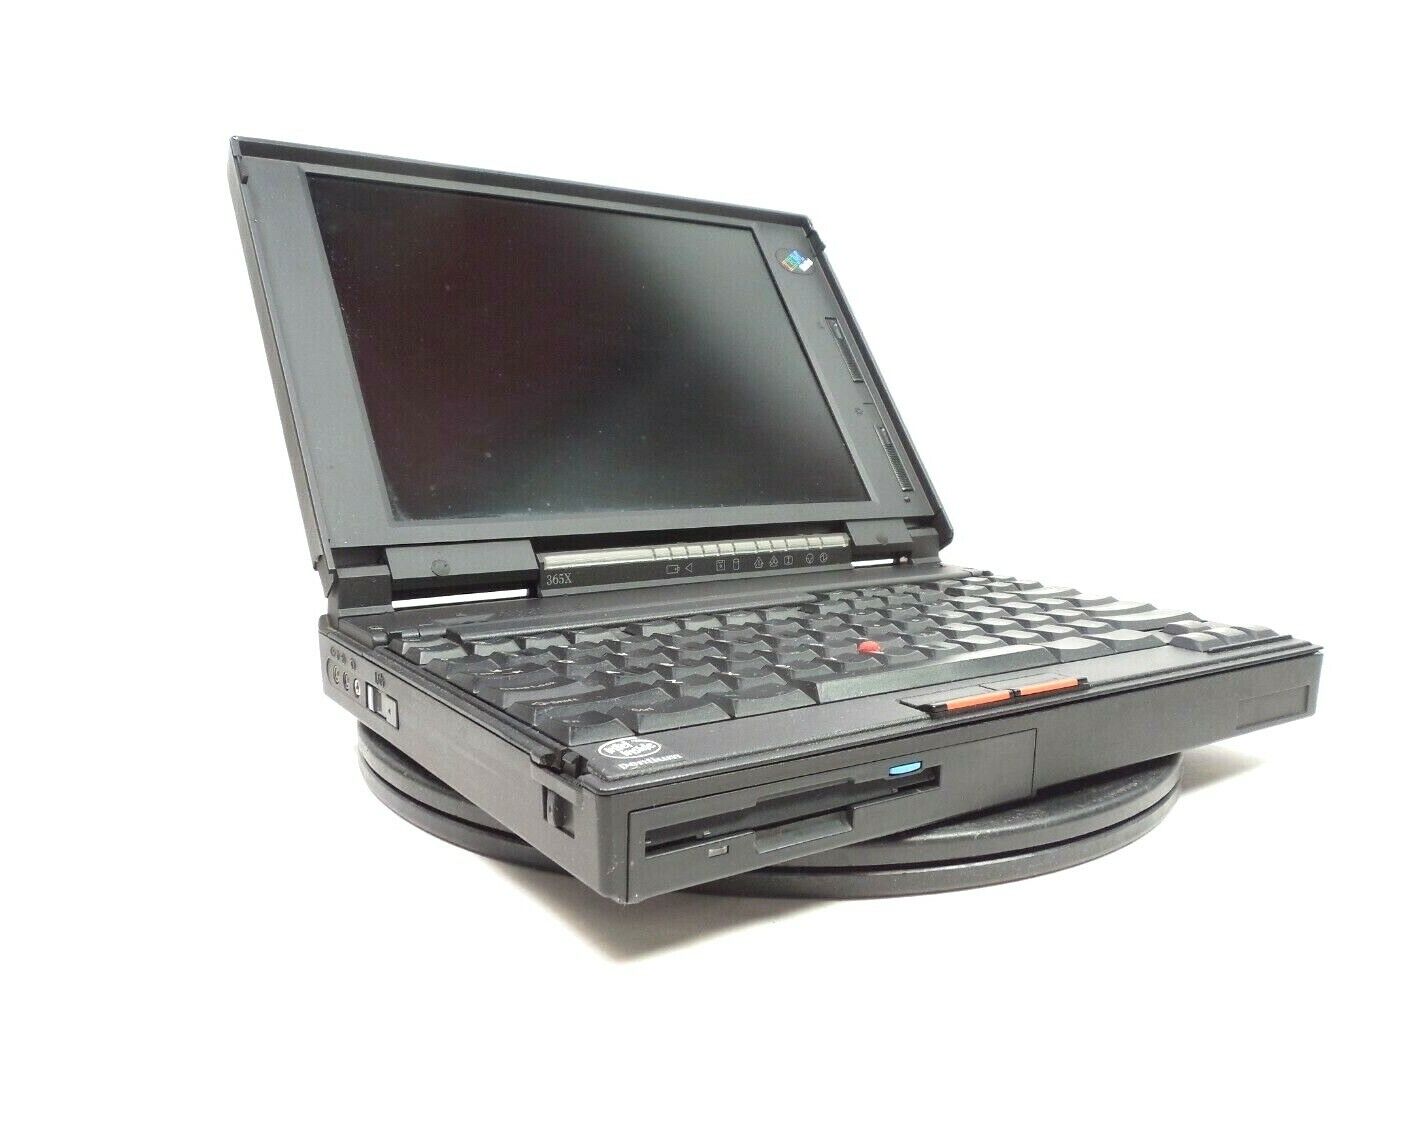 Vintage IBM ThinkPad 365X Pentium 24MB RAM Windows 95 4.0 Floppy 775MB HDD